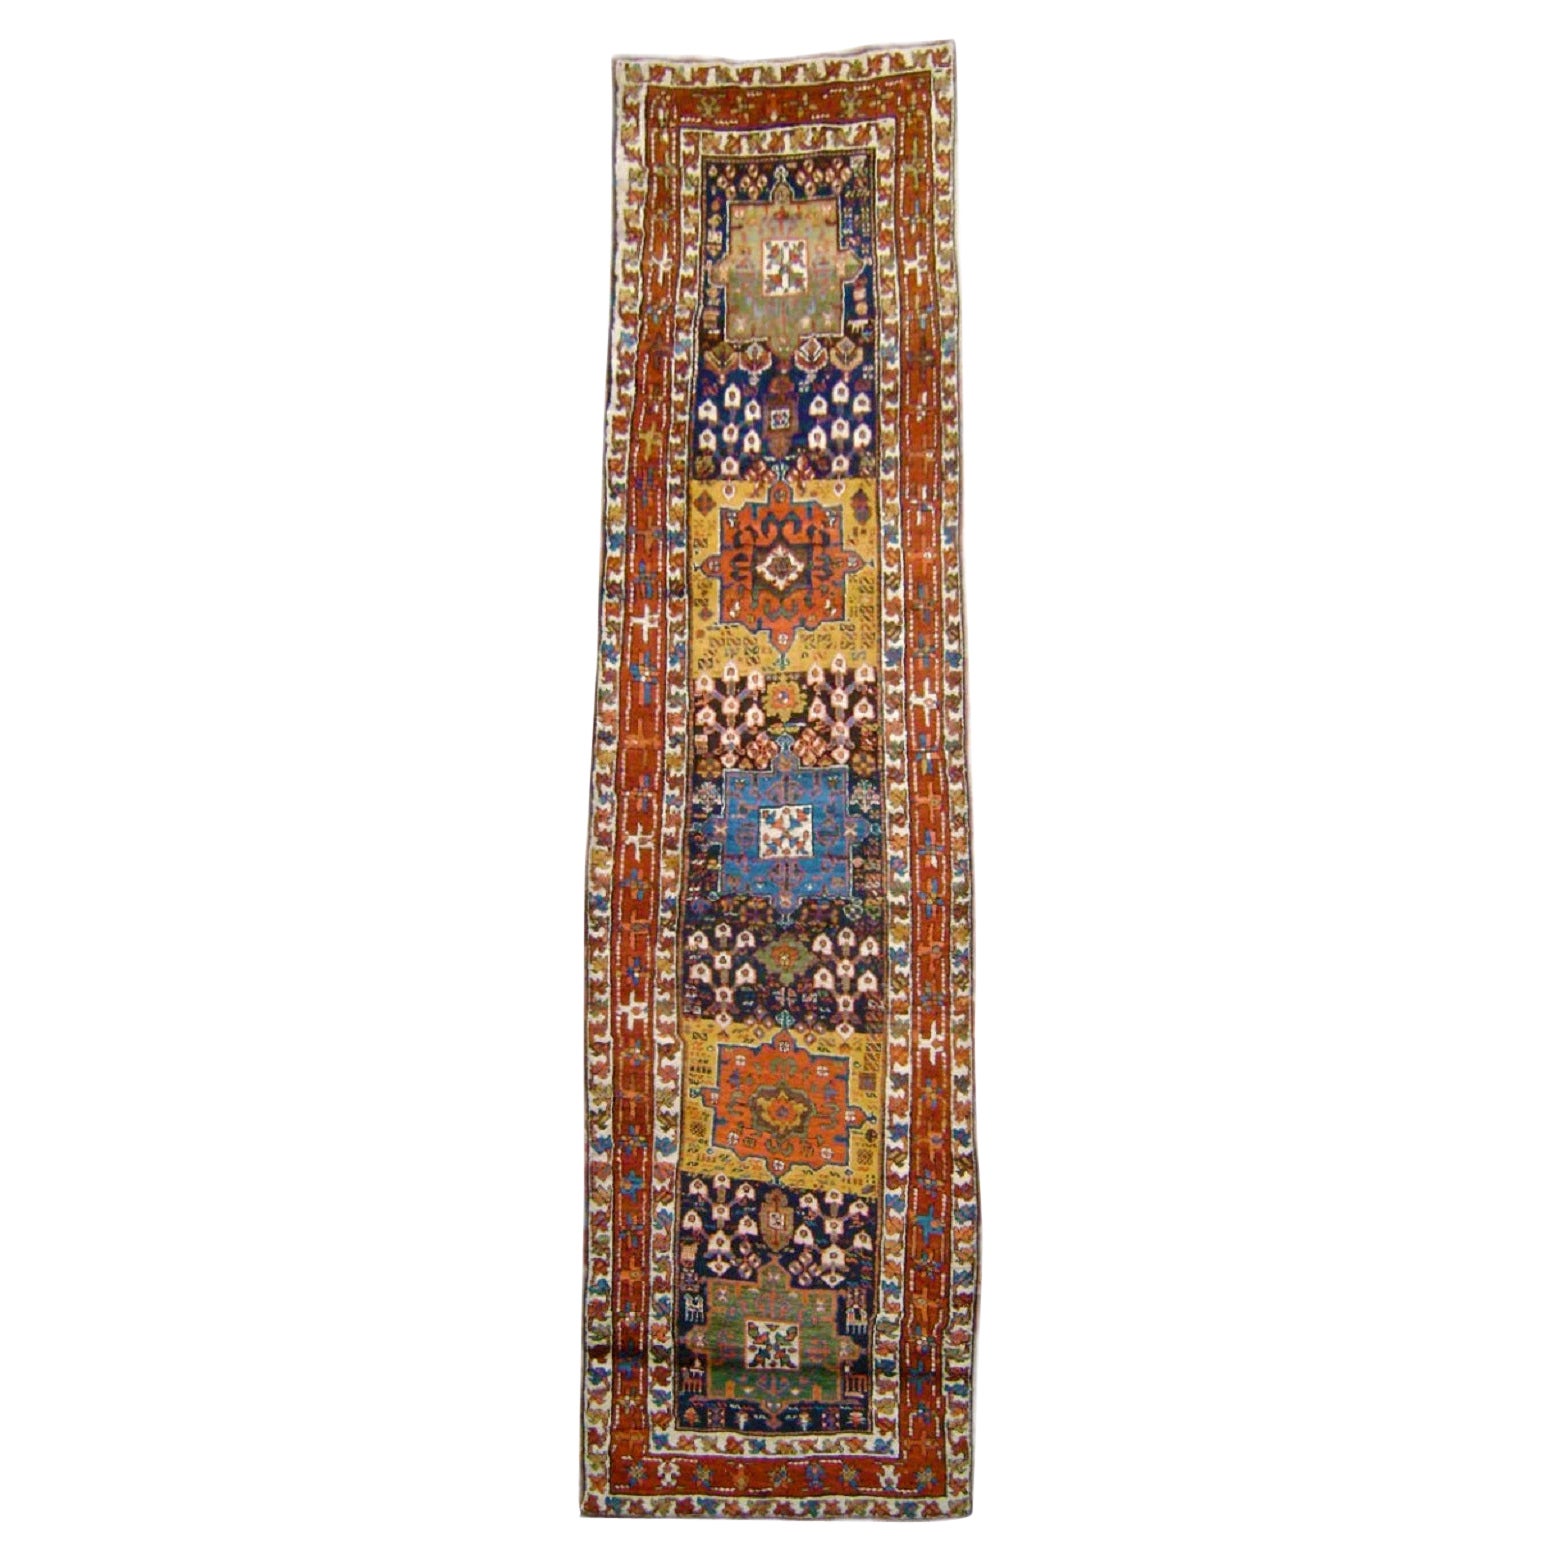 Antiker persischer Karadagh-Teppich, 19. Jahrhundert